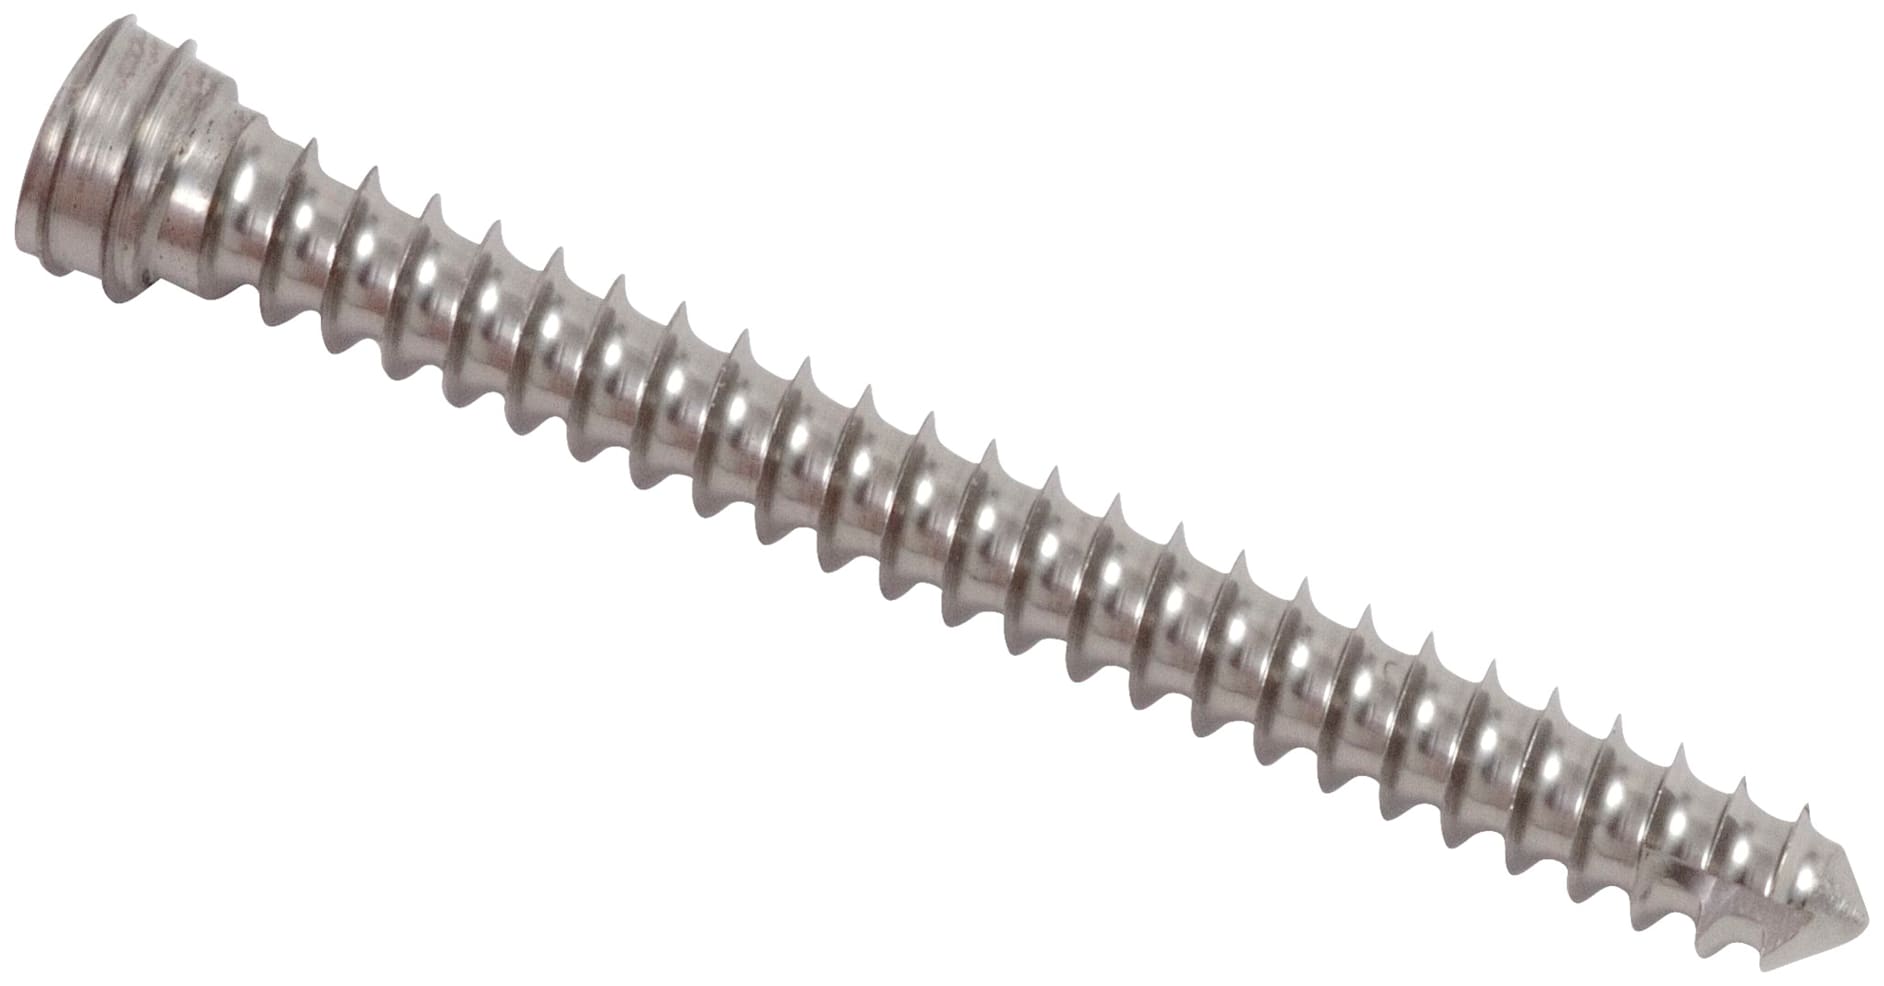 Cortical Locking Screw, 3.5 mm x 40 mm